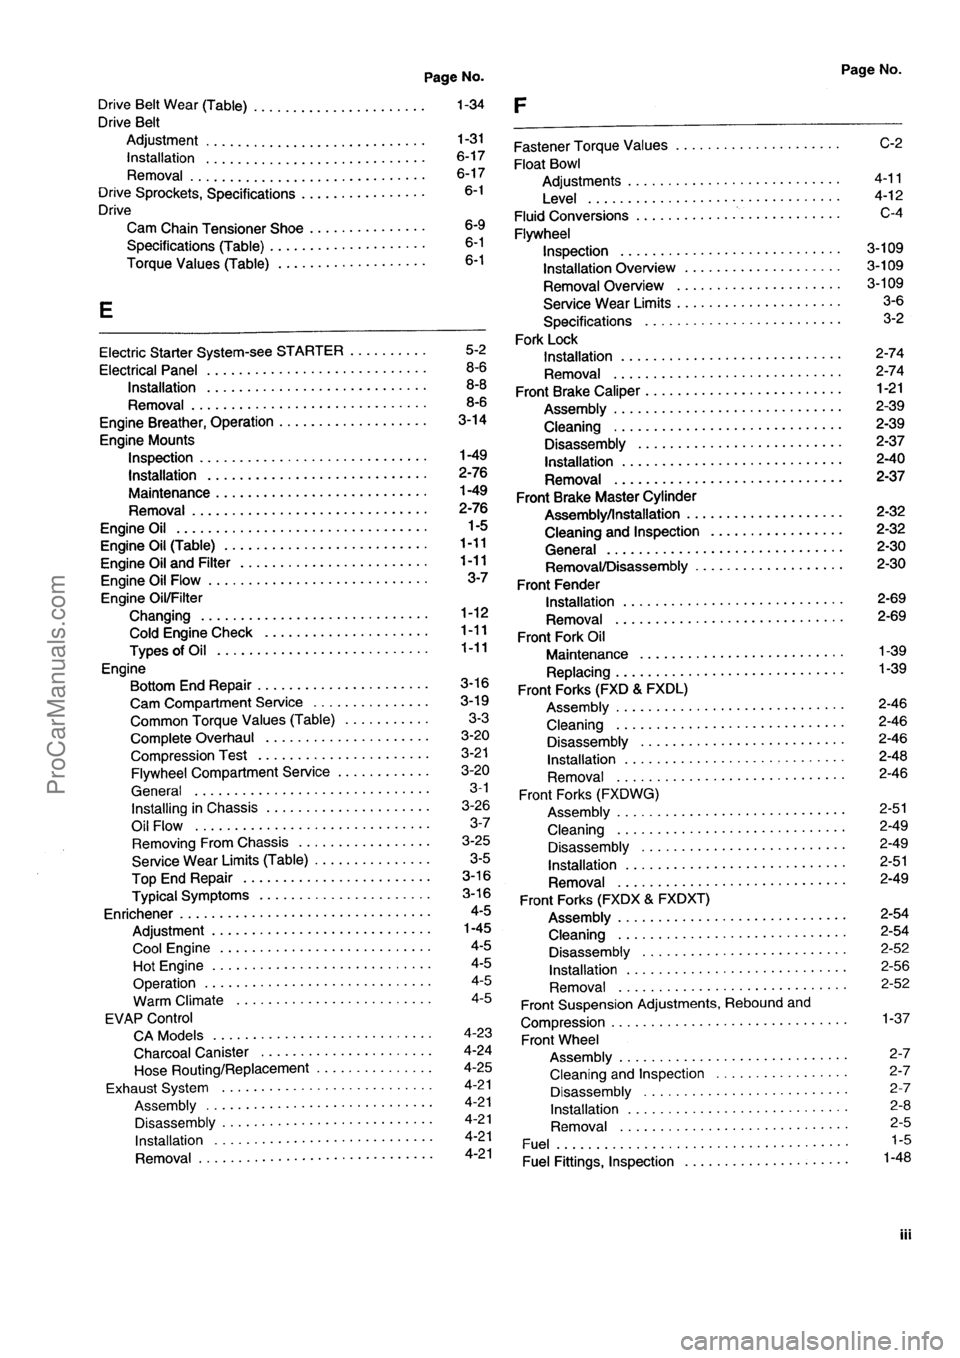 HARLEY-DAVIDSON DYNA GLIDE 2003  Service Manual  [5]
ProCarManuals.com 